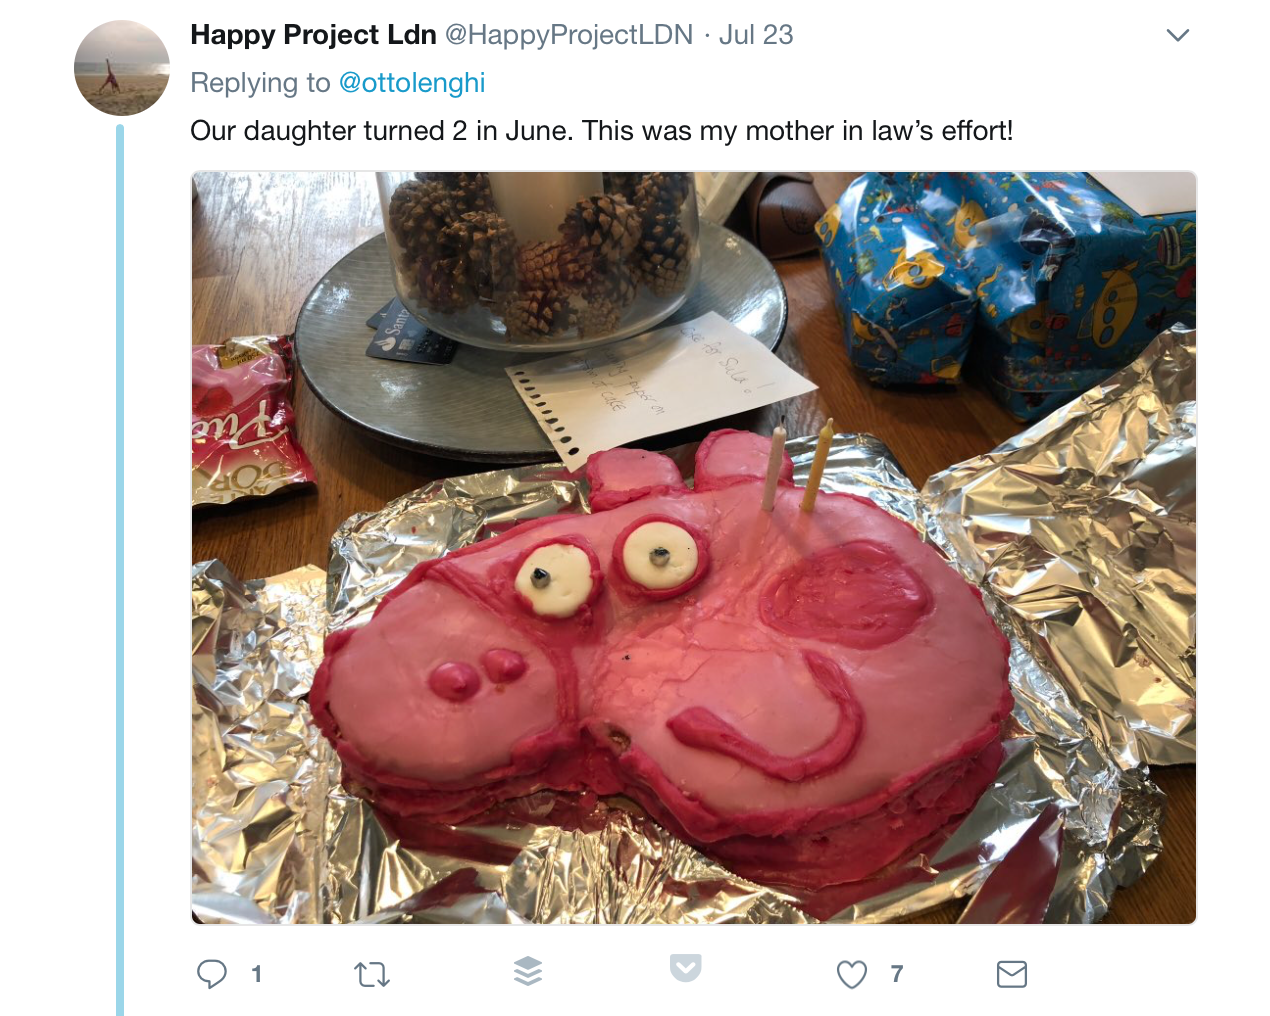 Peppa Pig cakes on Twitter